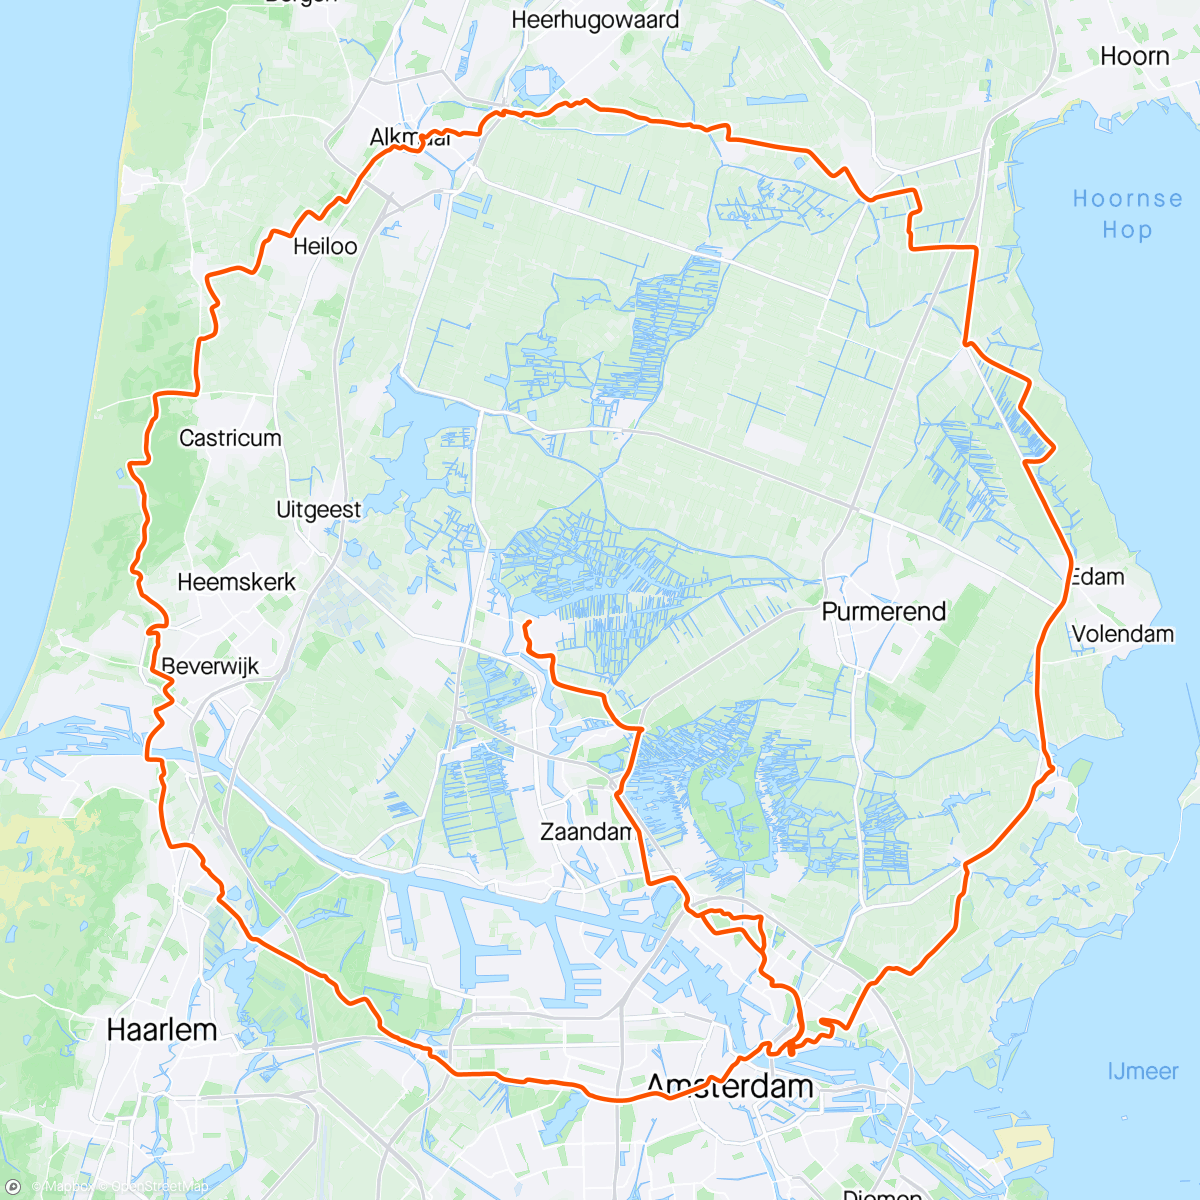 Mappa dell'attività Zondag Ochtendrit, @Mr.ride-A-round.cc
#deechterondevanAmsterdam 
#rondjefietsen